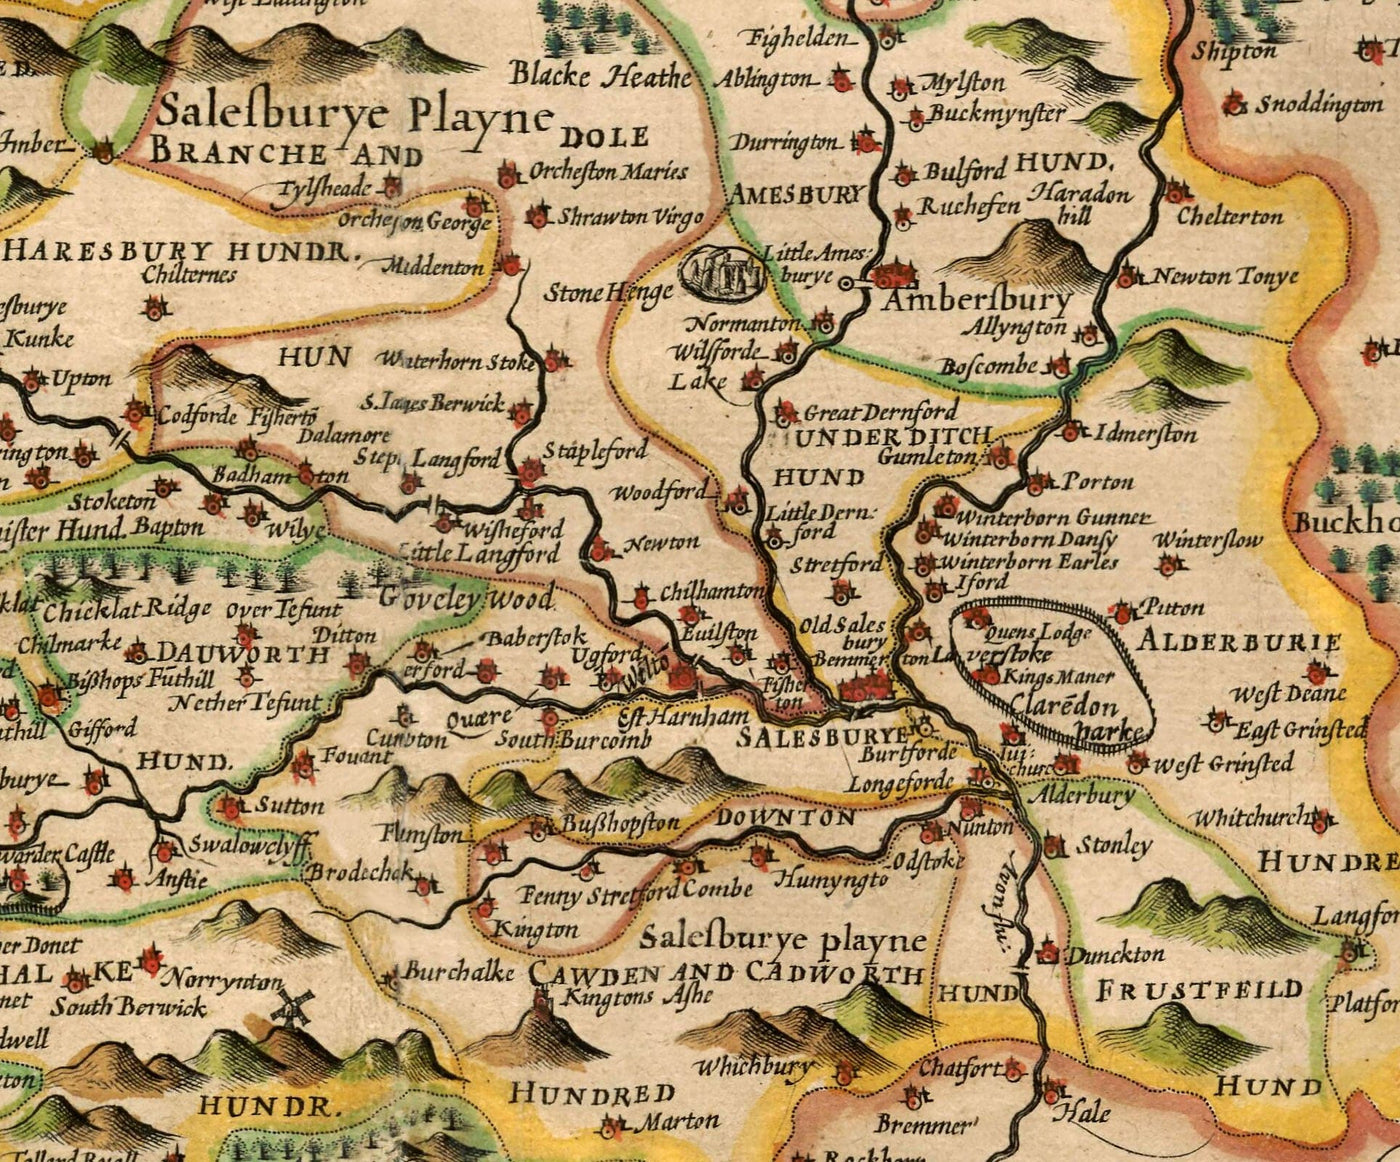 Old Map of Wiltshire in 1611 by John Speed - Salisbury, Stonehenge, Swindon, Trowbridge